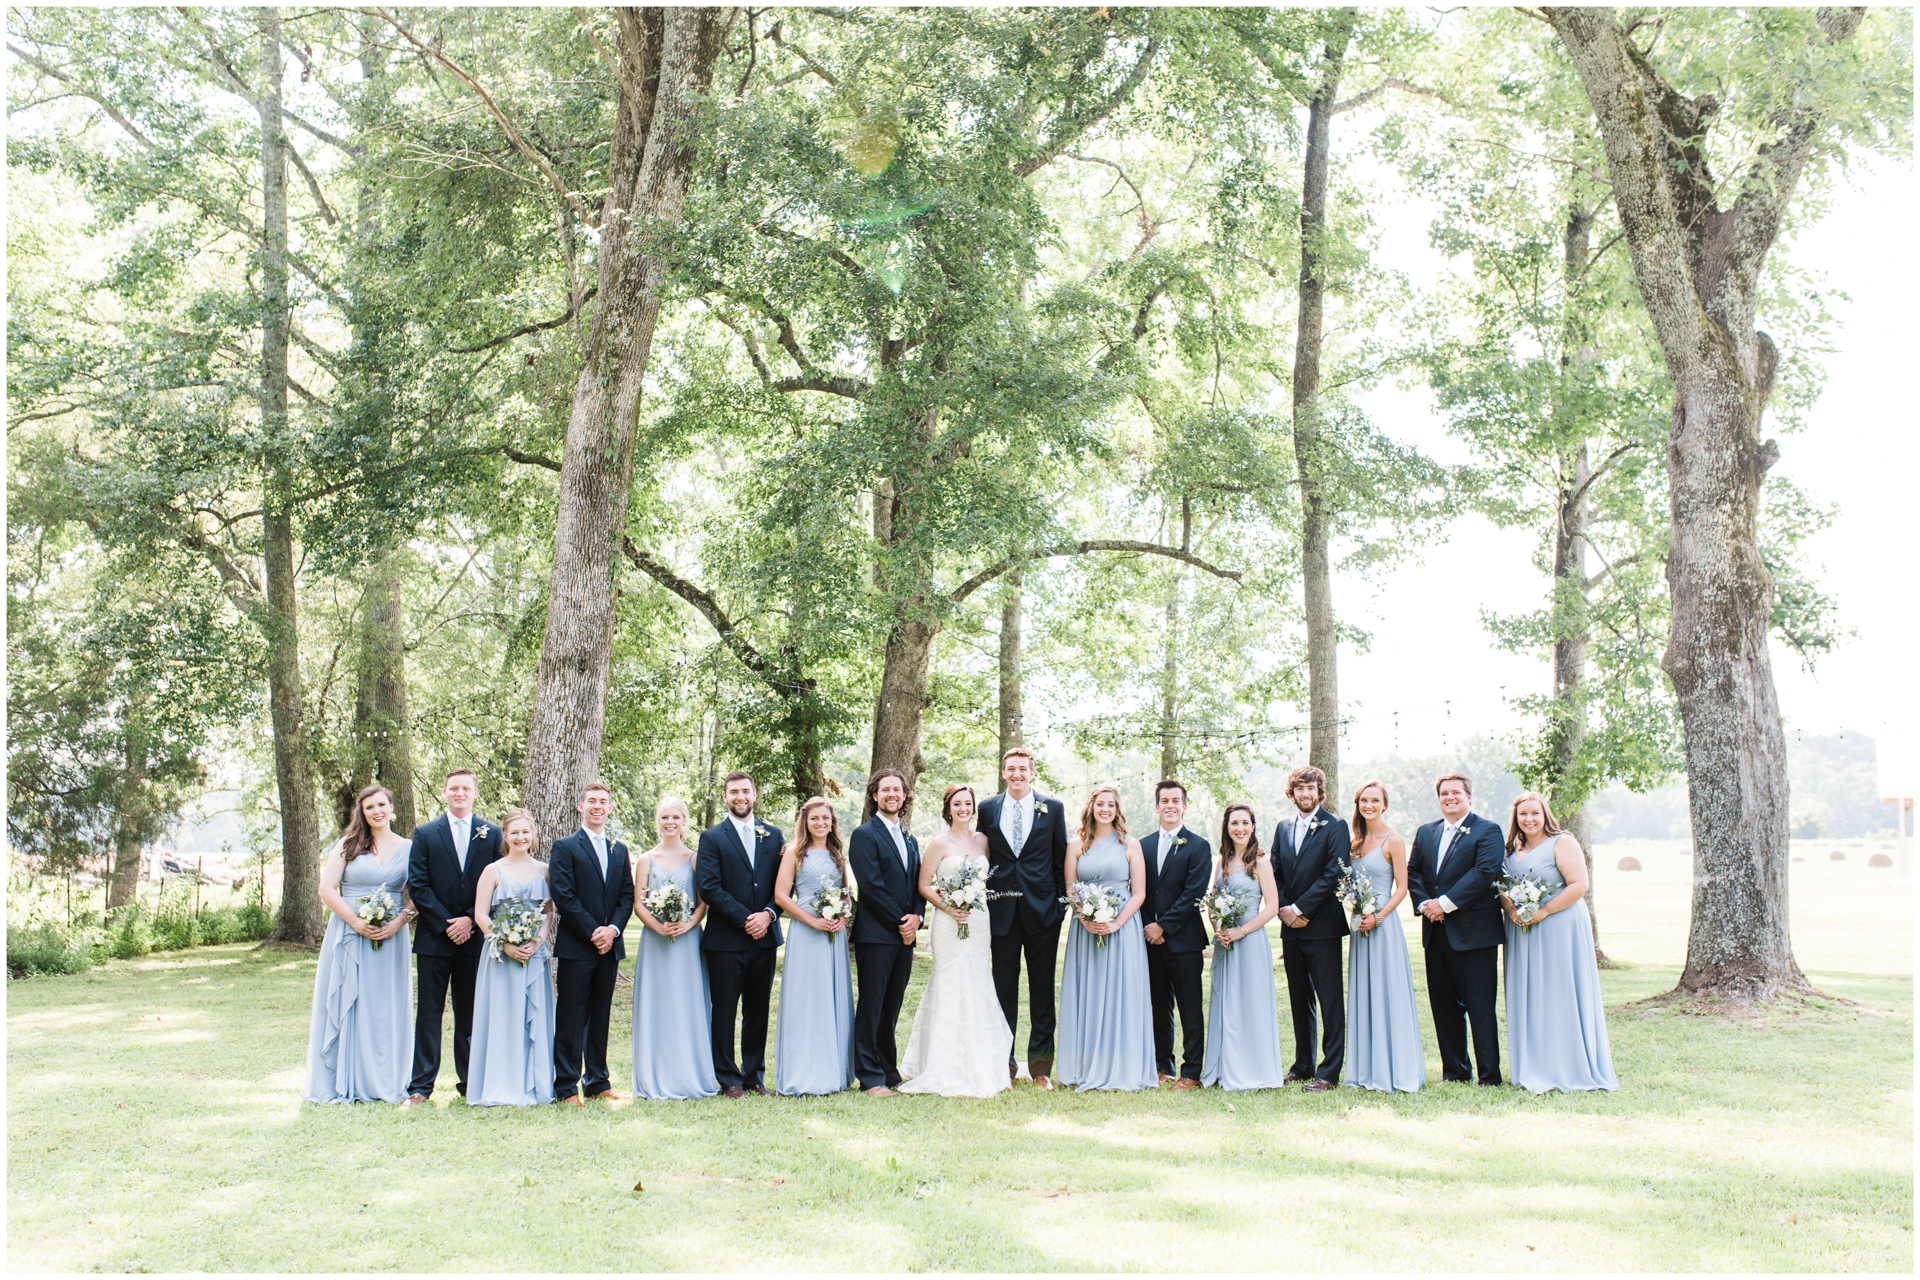 Elyse + Garret - Harvest Hollow Venue and Farm Wedding - Huntsville Alabama Wedding - Twenty Oaks Photography - 30 dusty blue and navy bridal party